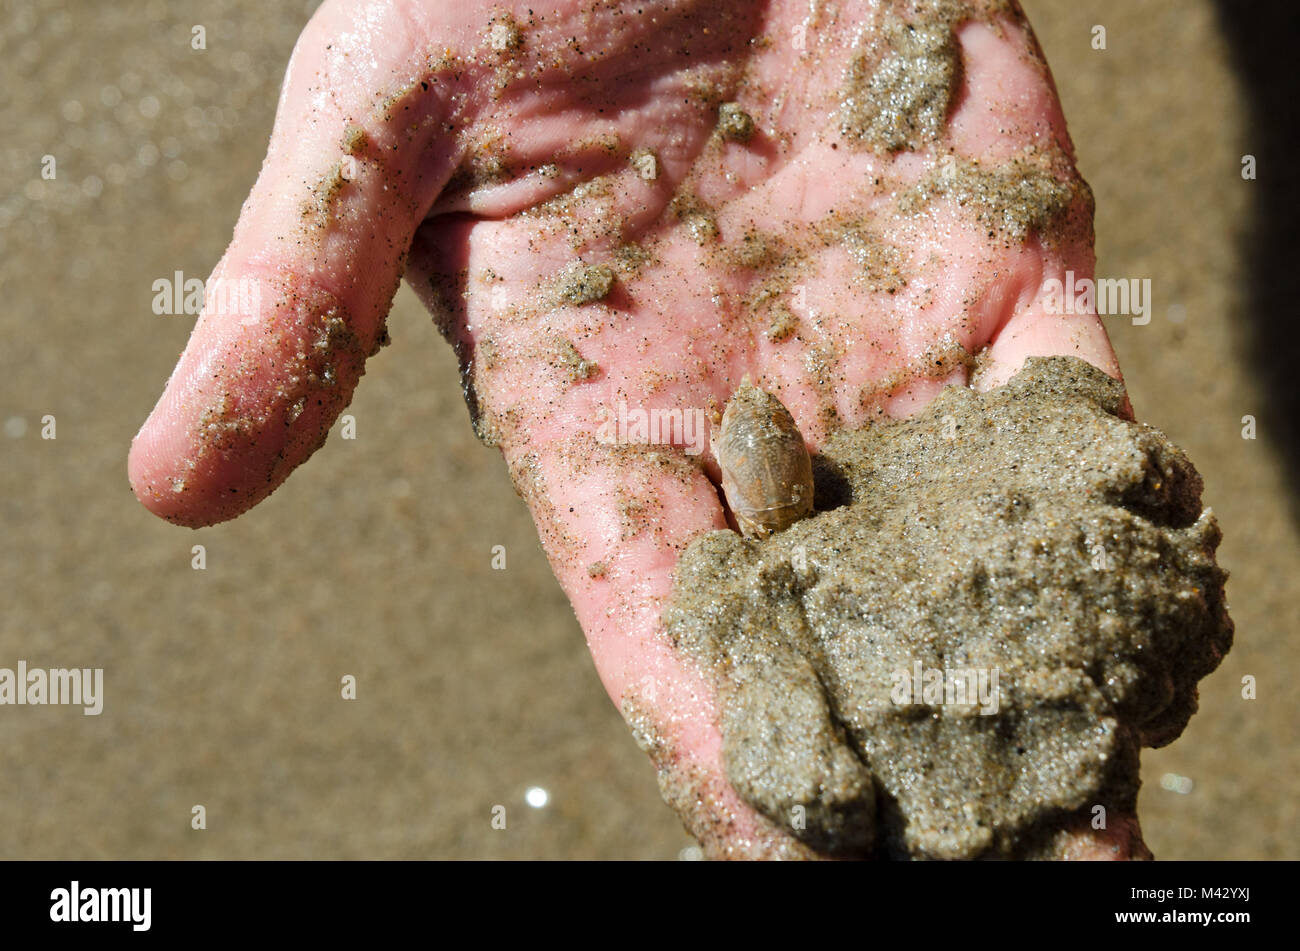 Hand holding a mole crab (Emerita analoga), El Matador State Beach, Malibu, California. Stock Photo